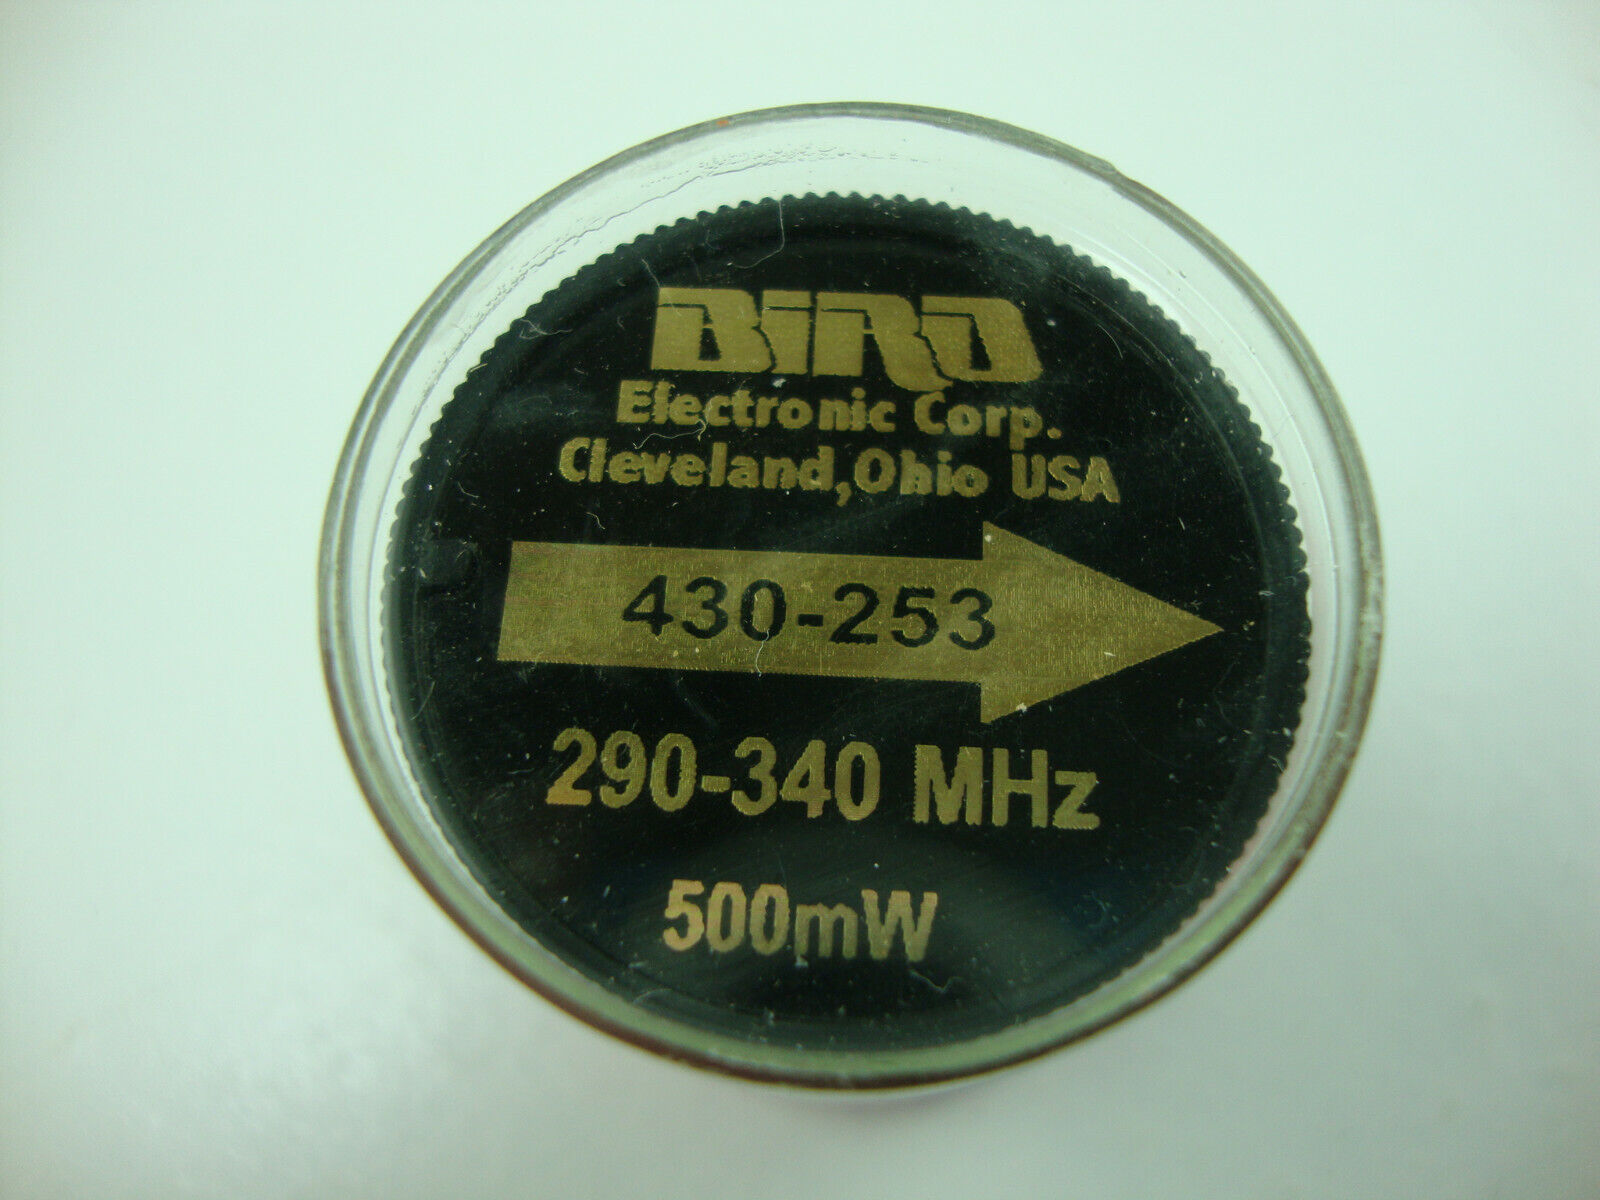 BIRD ELECTRONIC 430-253 ELEMENT / SLUG 500mW 290-340 MHz for WATTMETER